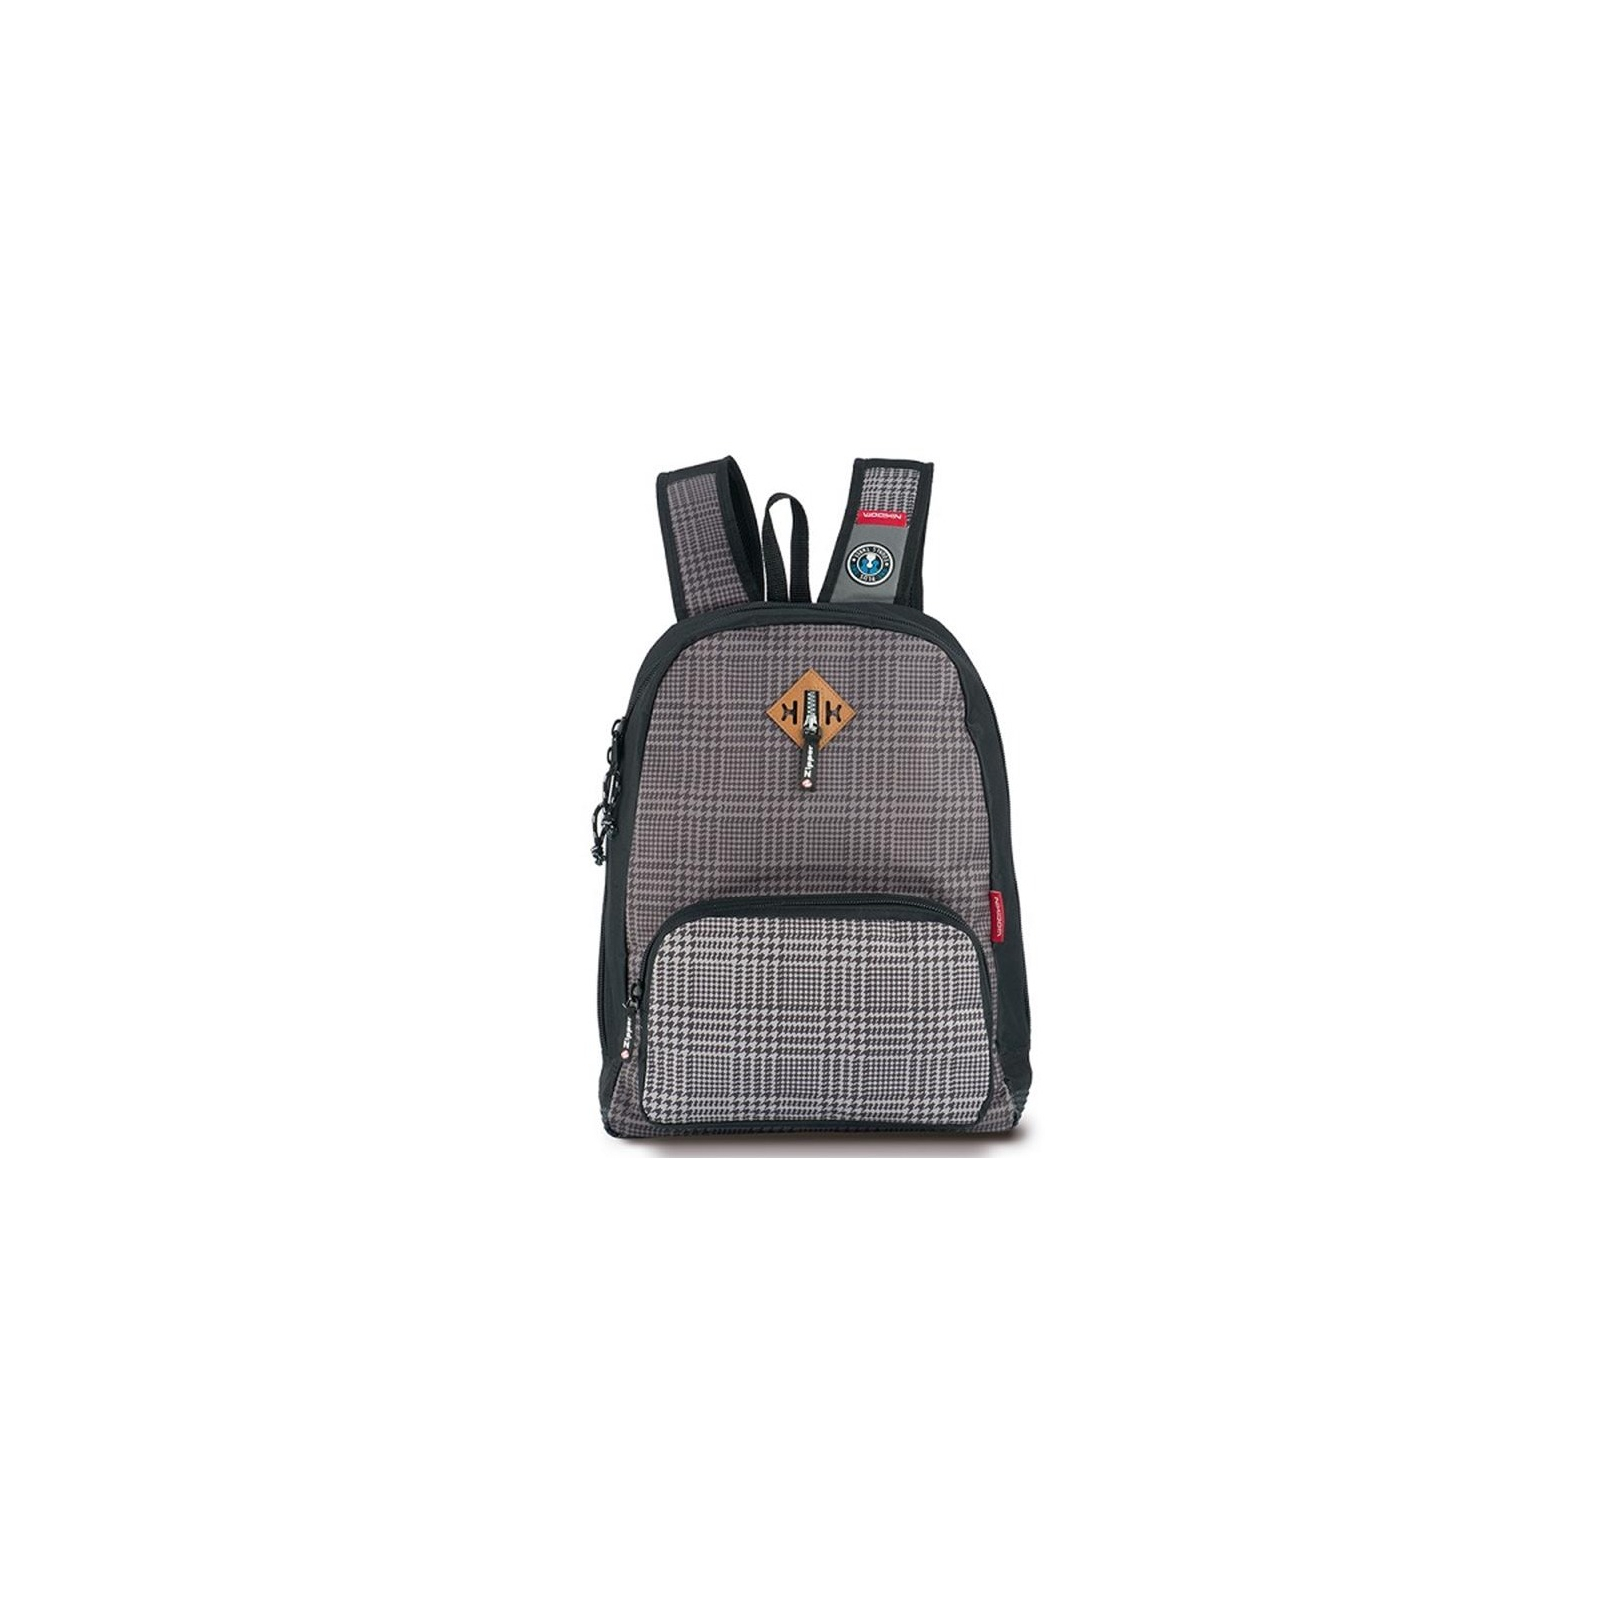 Рюкзак шкільний Nikidom Zipper Wales (NKD-9500)